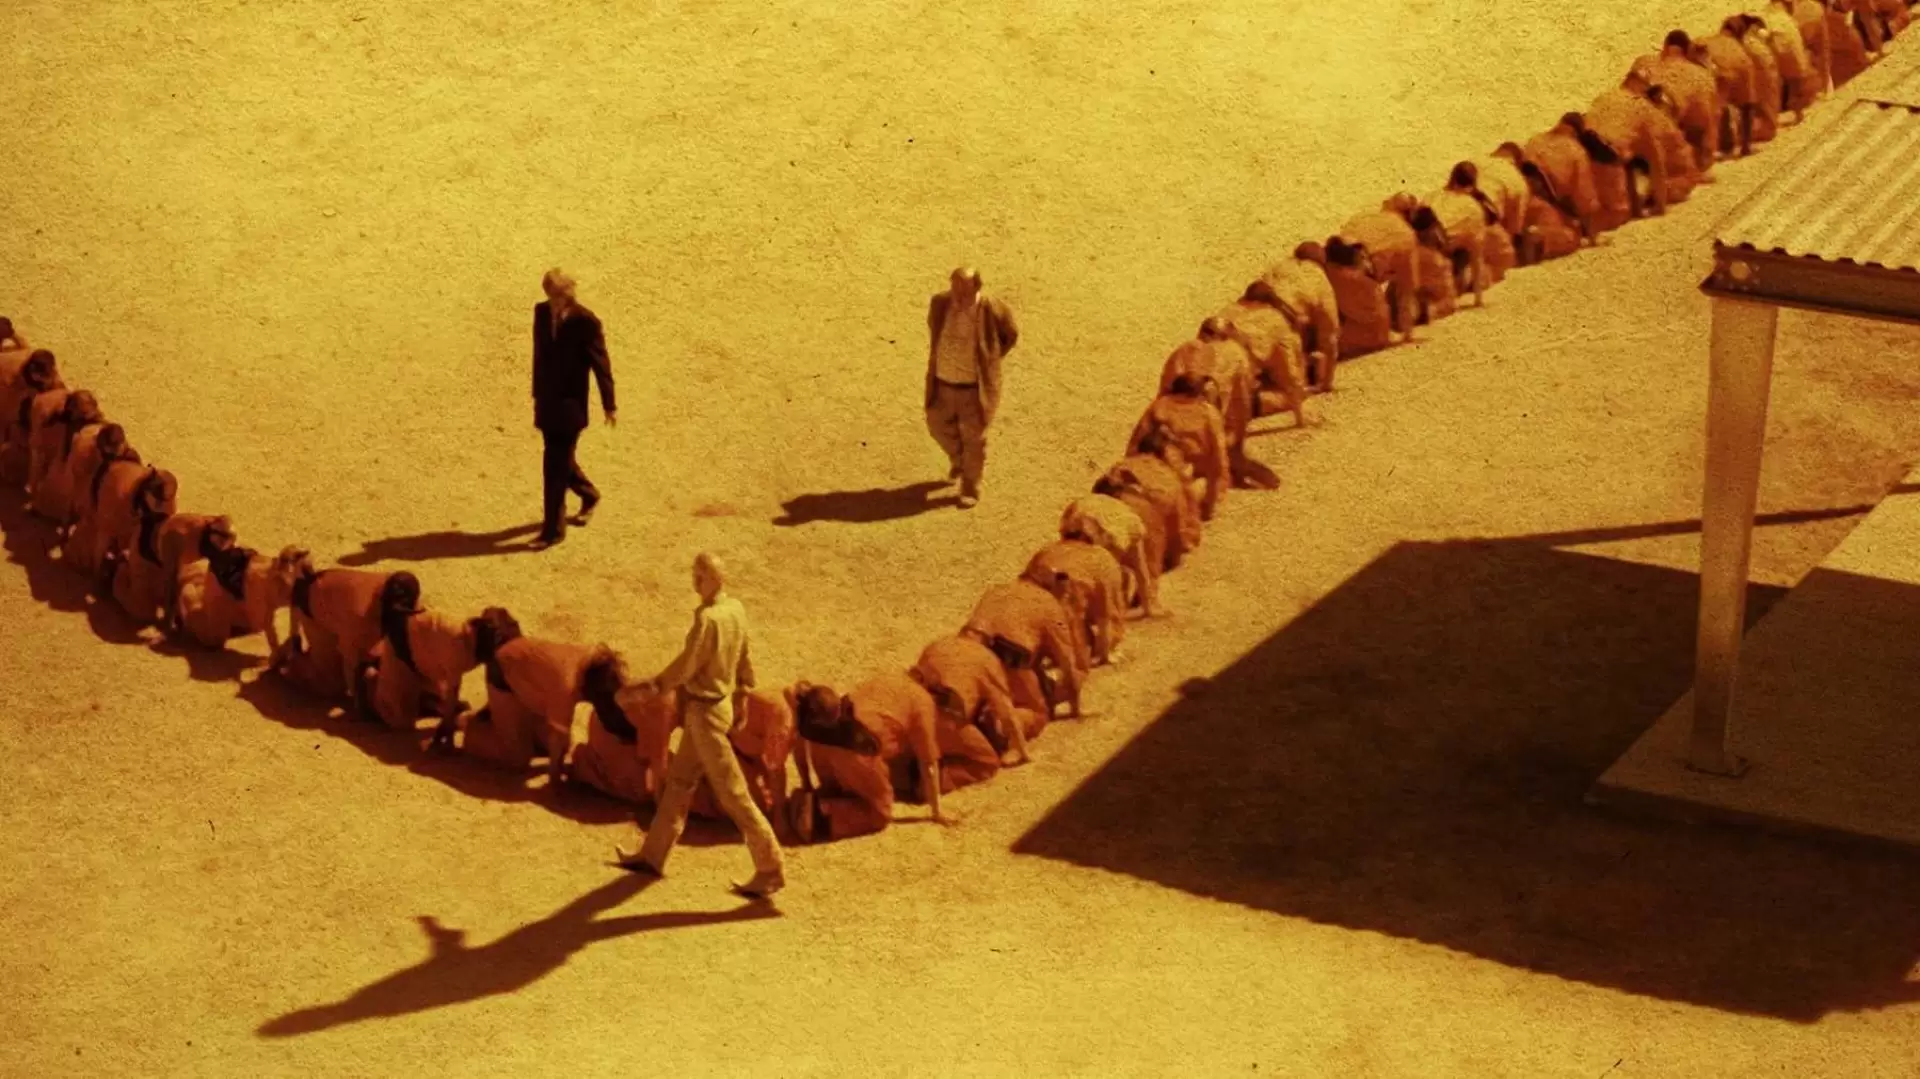 دانلود فیلم The Human Centipede III (Final Sequence) 2015 (هزارپای انسانی ۳) با زیرنویس فارسی و تماشای آنلاین